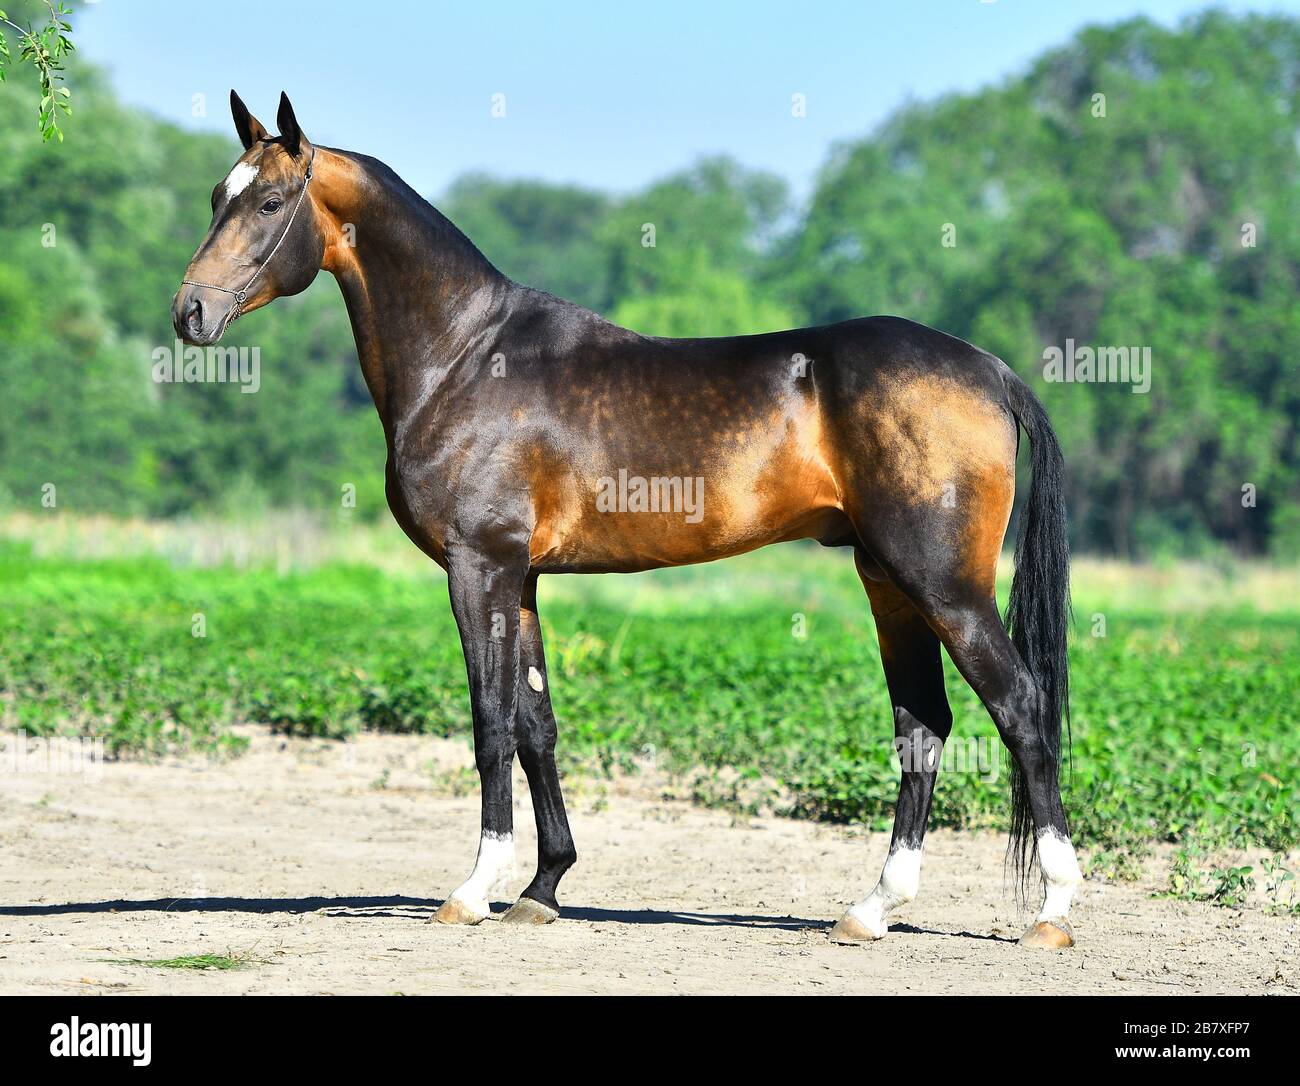 dark-buckskin-akhal-teke-stallion-posing-in-the-green-field-2B7XFP7.jpg